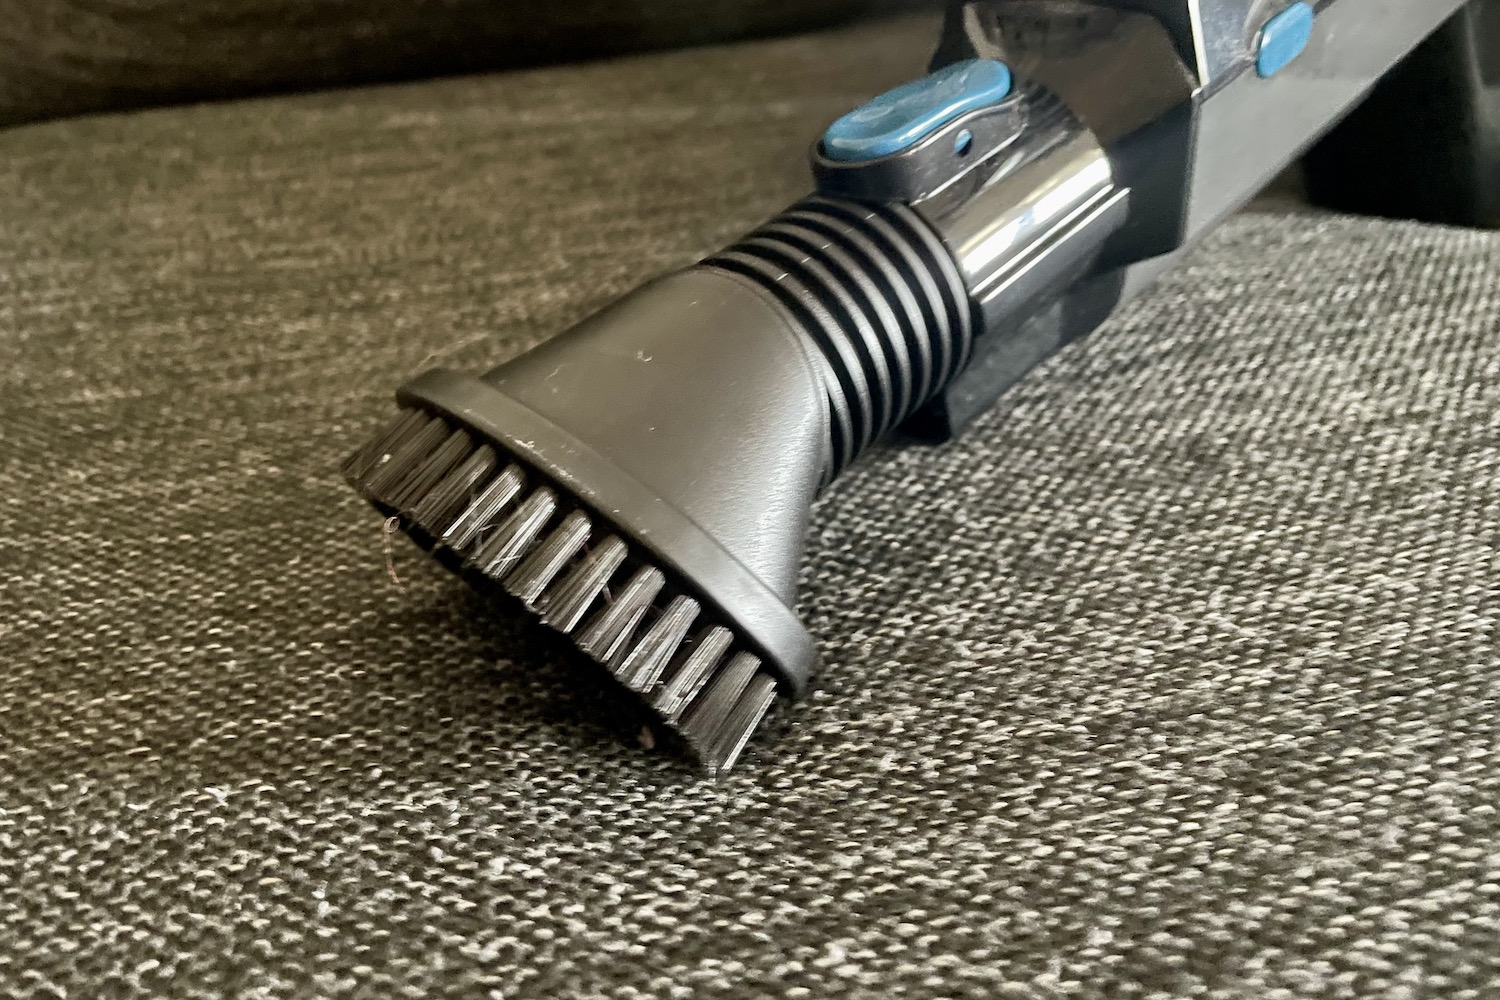 Proscenic P11 Cordless Stick Vacuum with Optional Mop